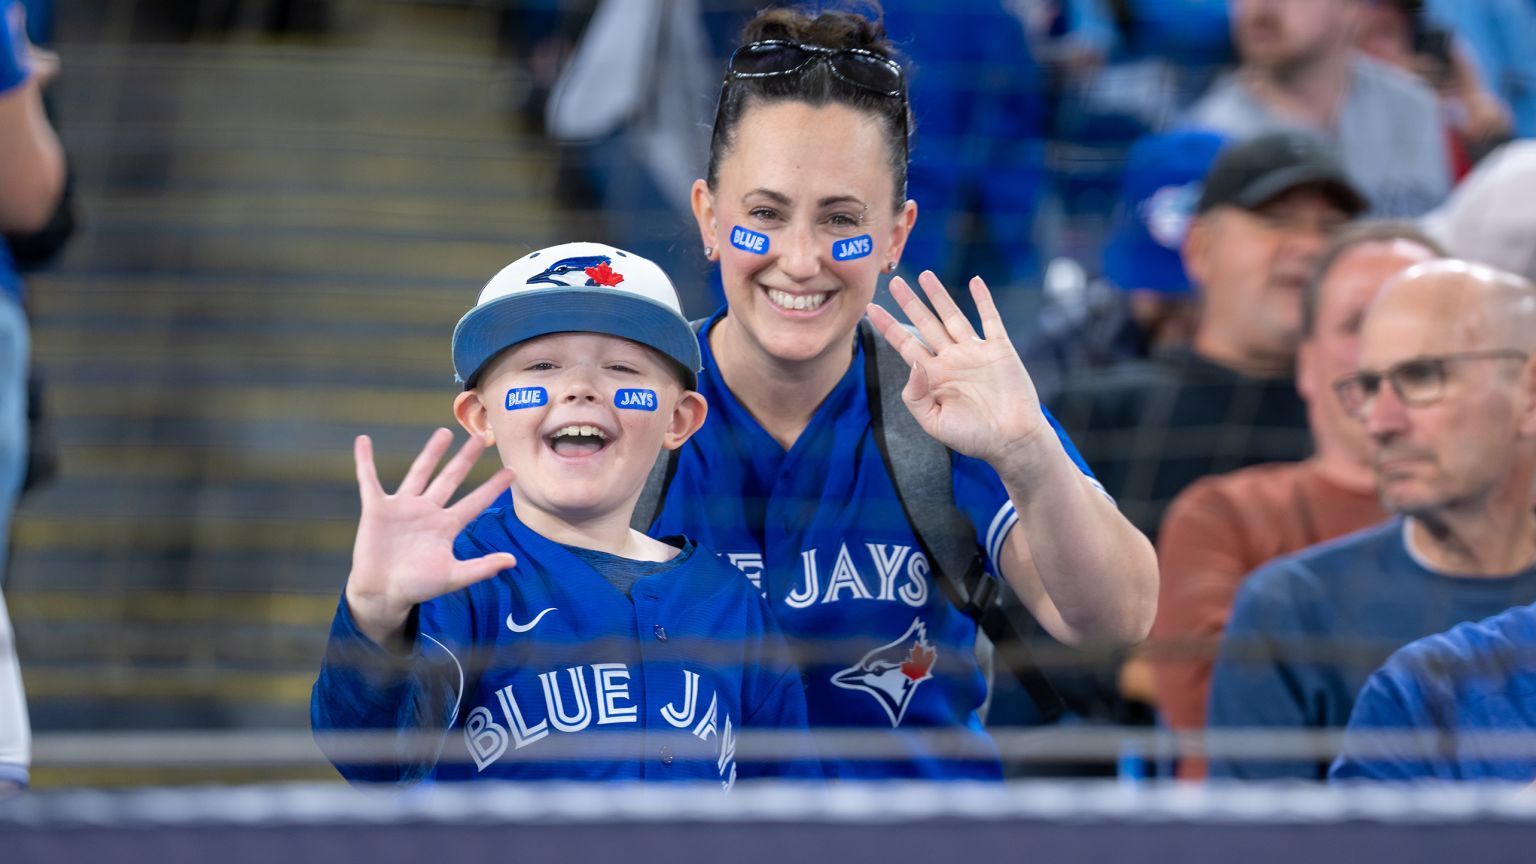 Toronto Blue Jays on X: Big week for this #BlueJays fan 🤩 Happy